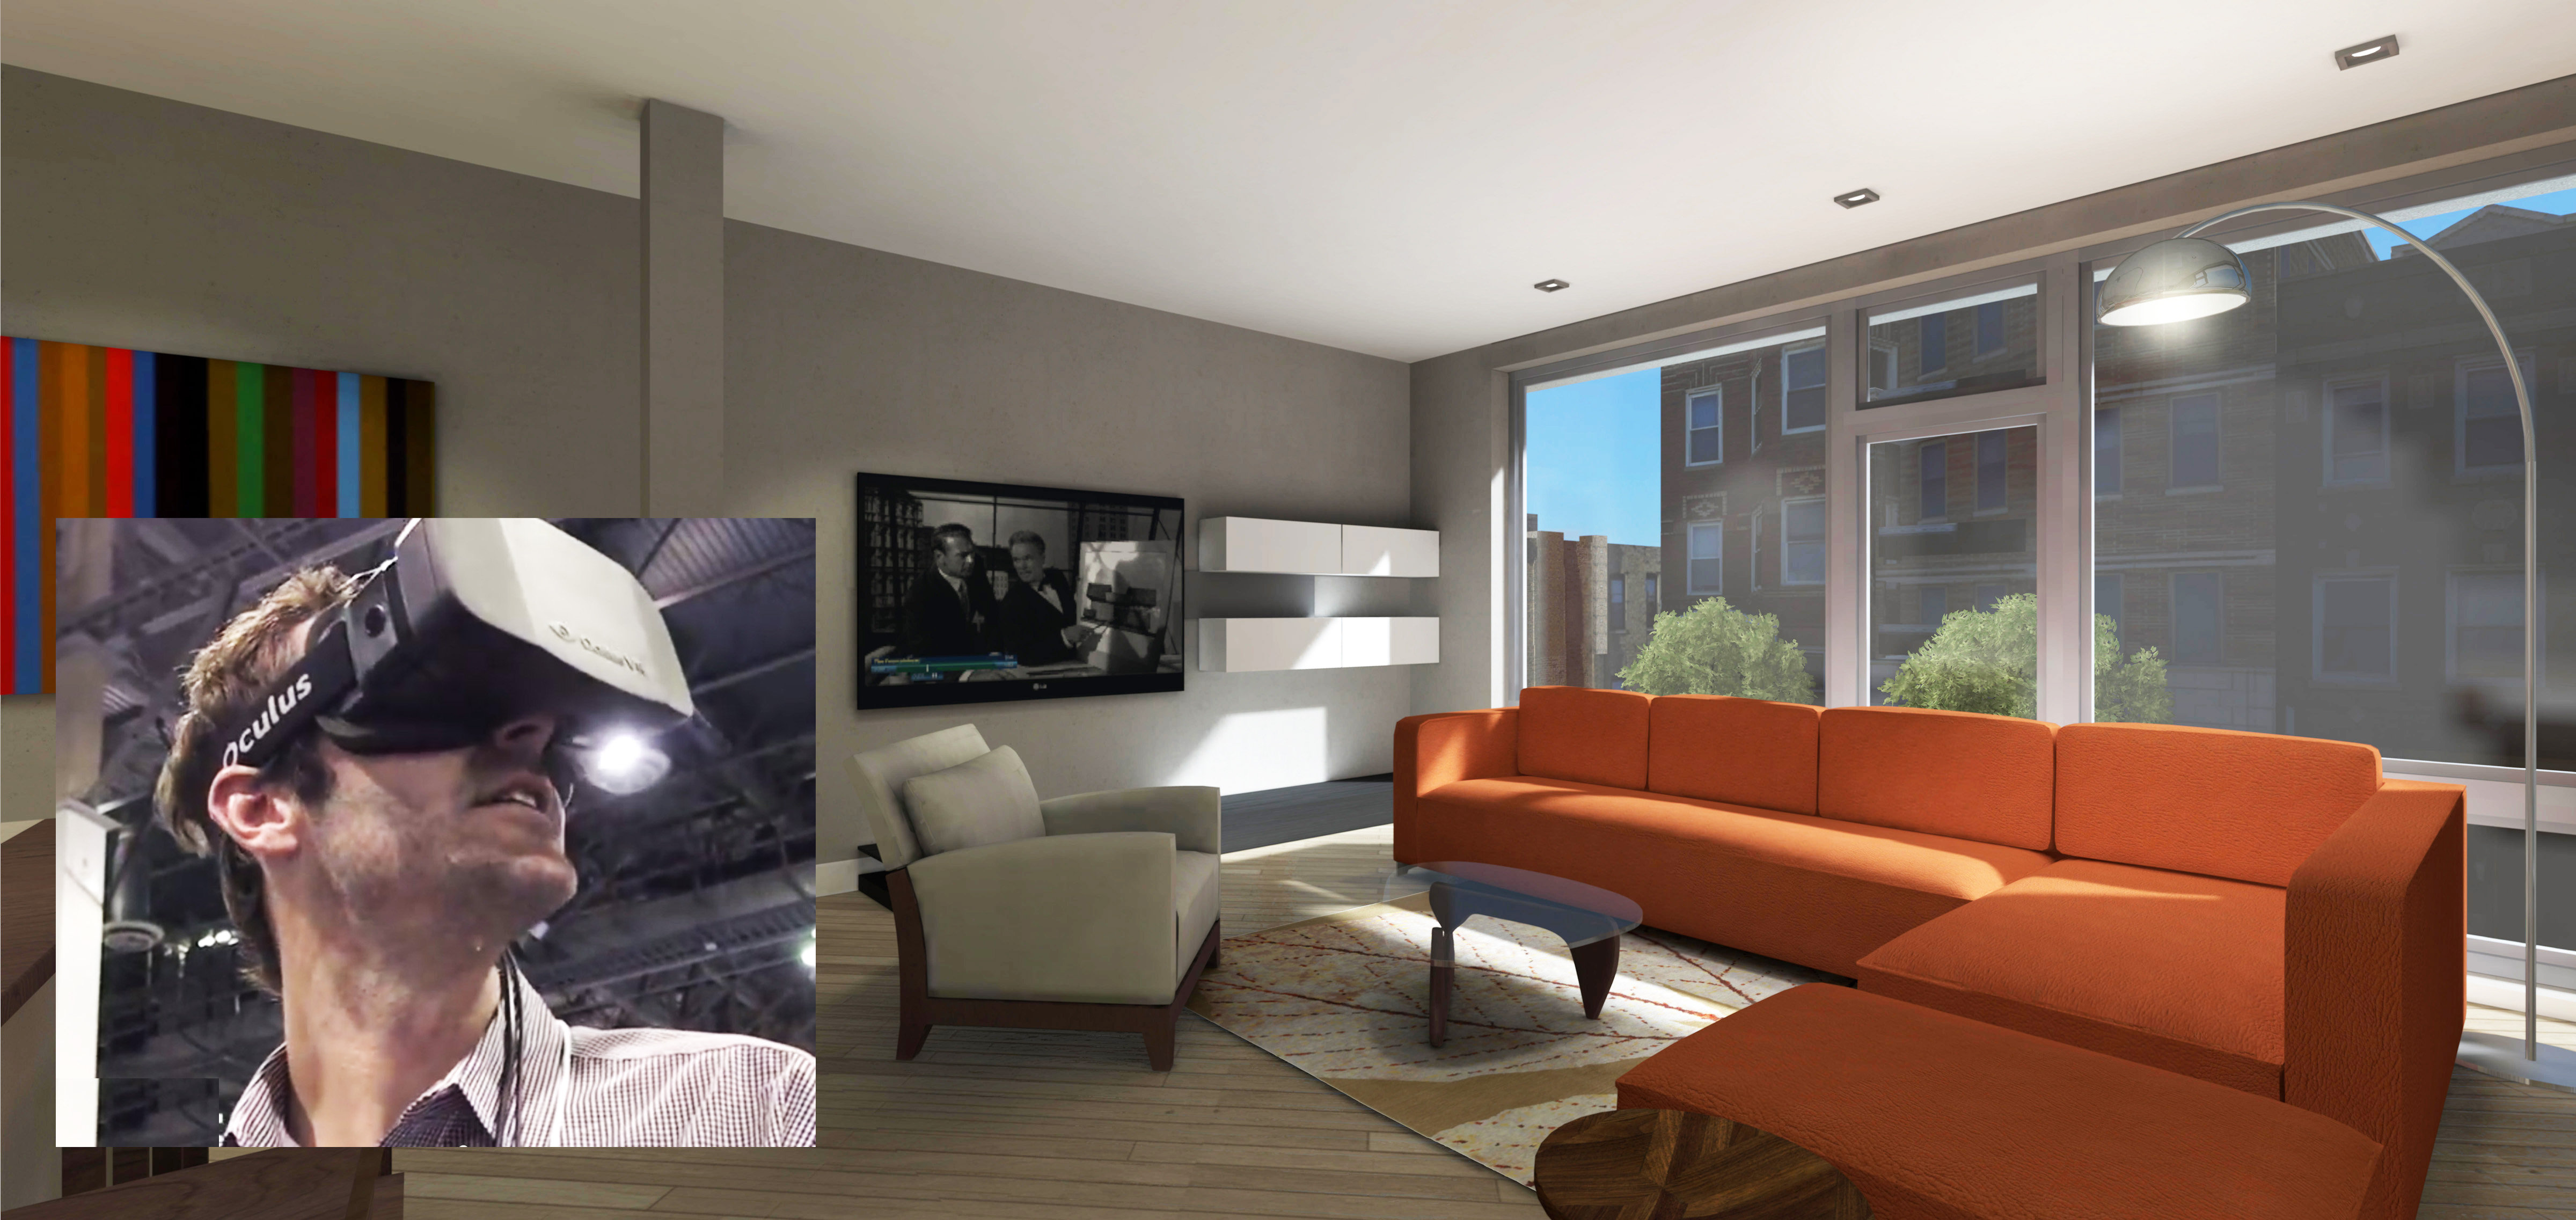 estate reality virtual development marketing oculus rift transform prweb